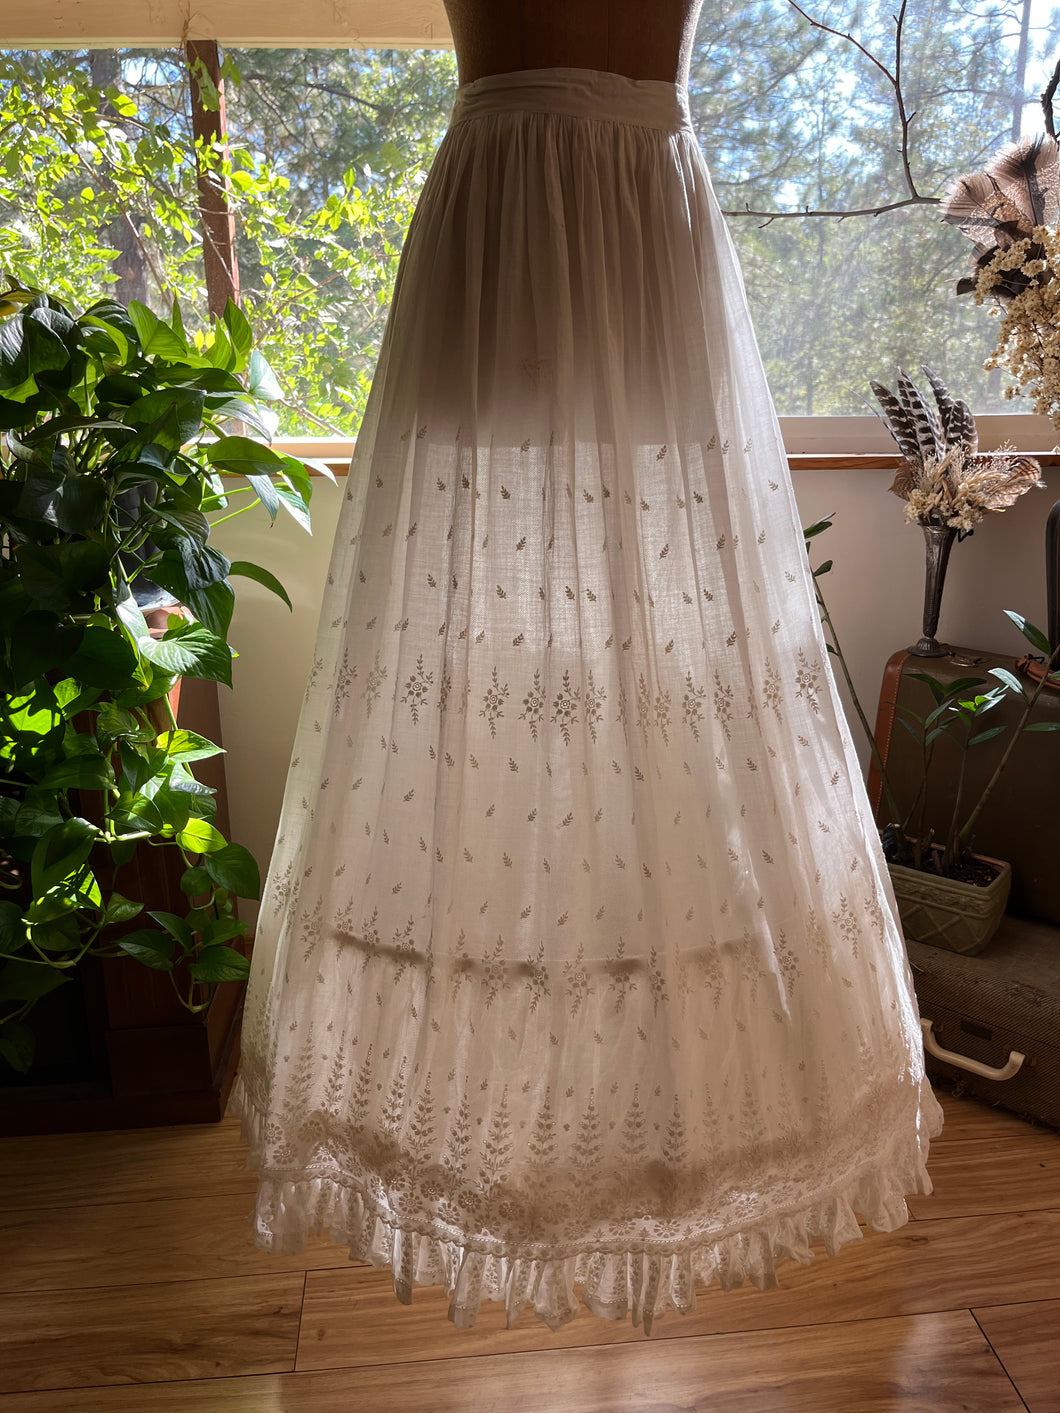 Antique 1900’s Edwardian Era White Cotton Petticoat Skirt